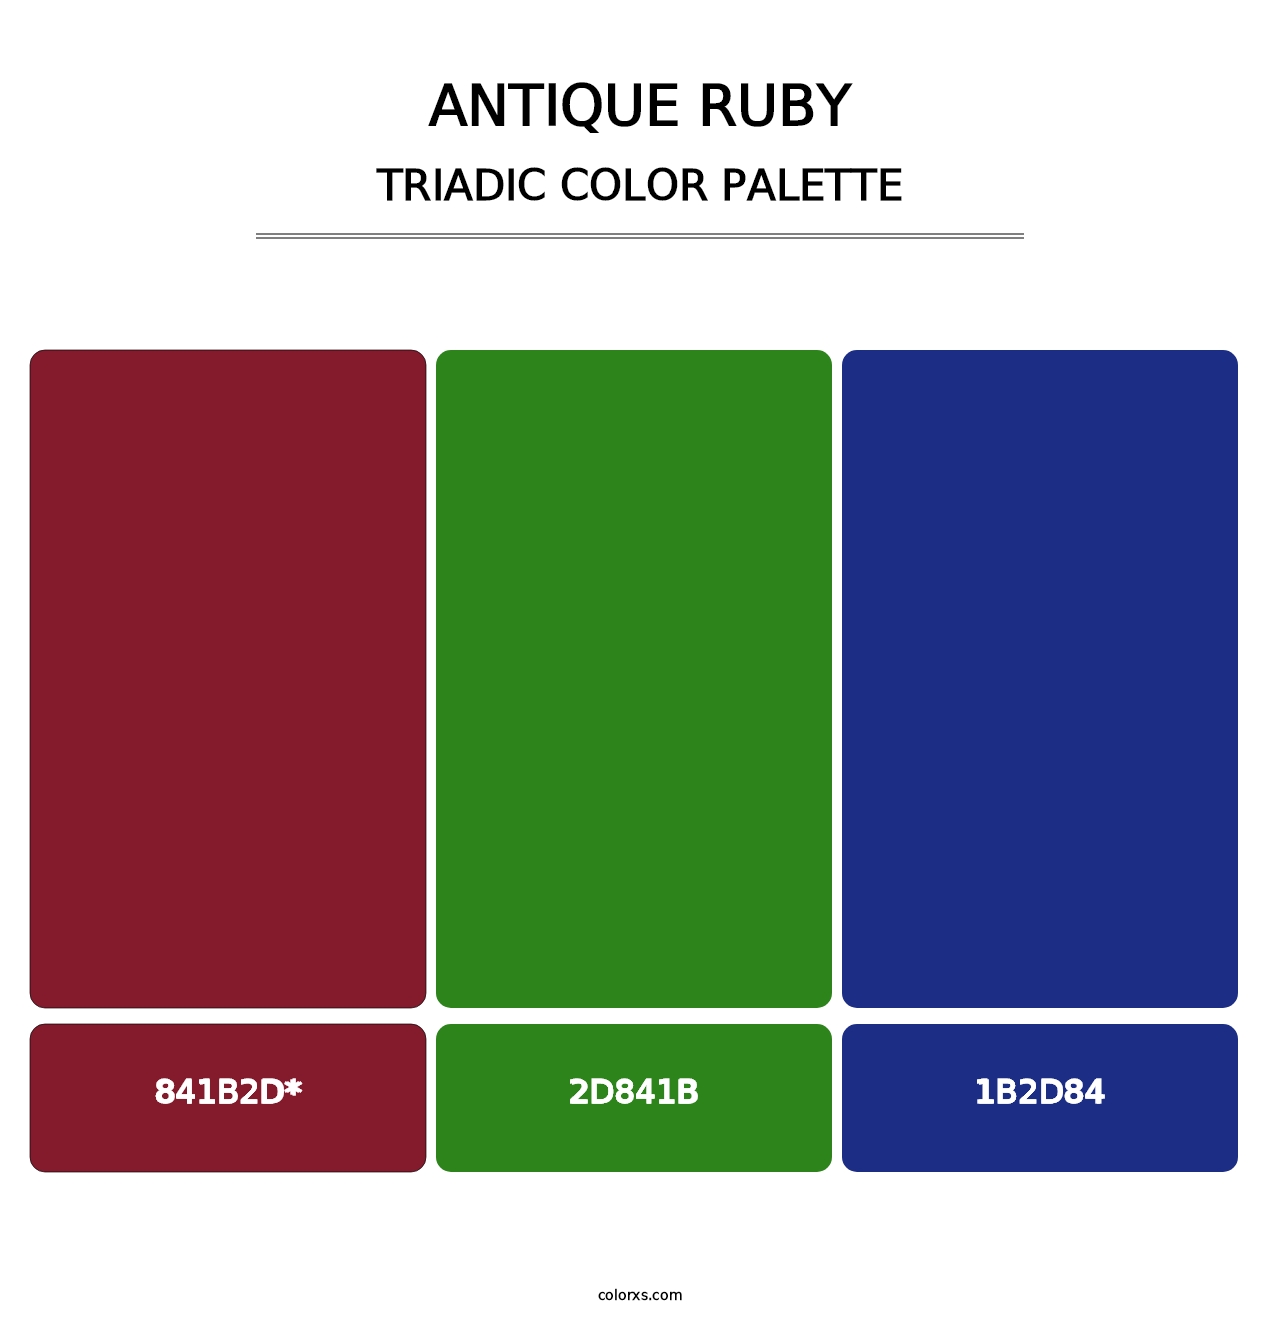 Antique Ruby - Triadic Color Palette